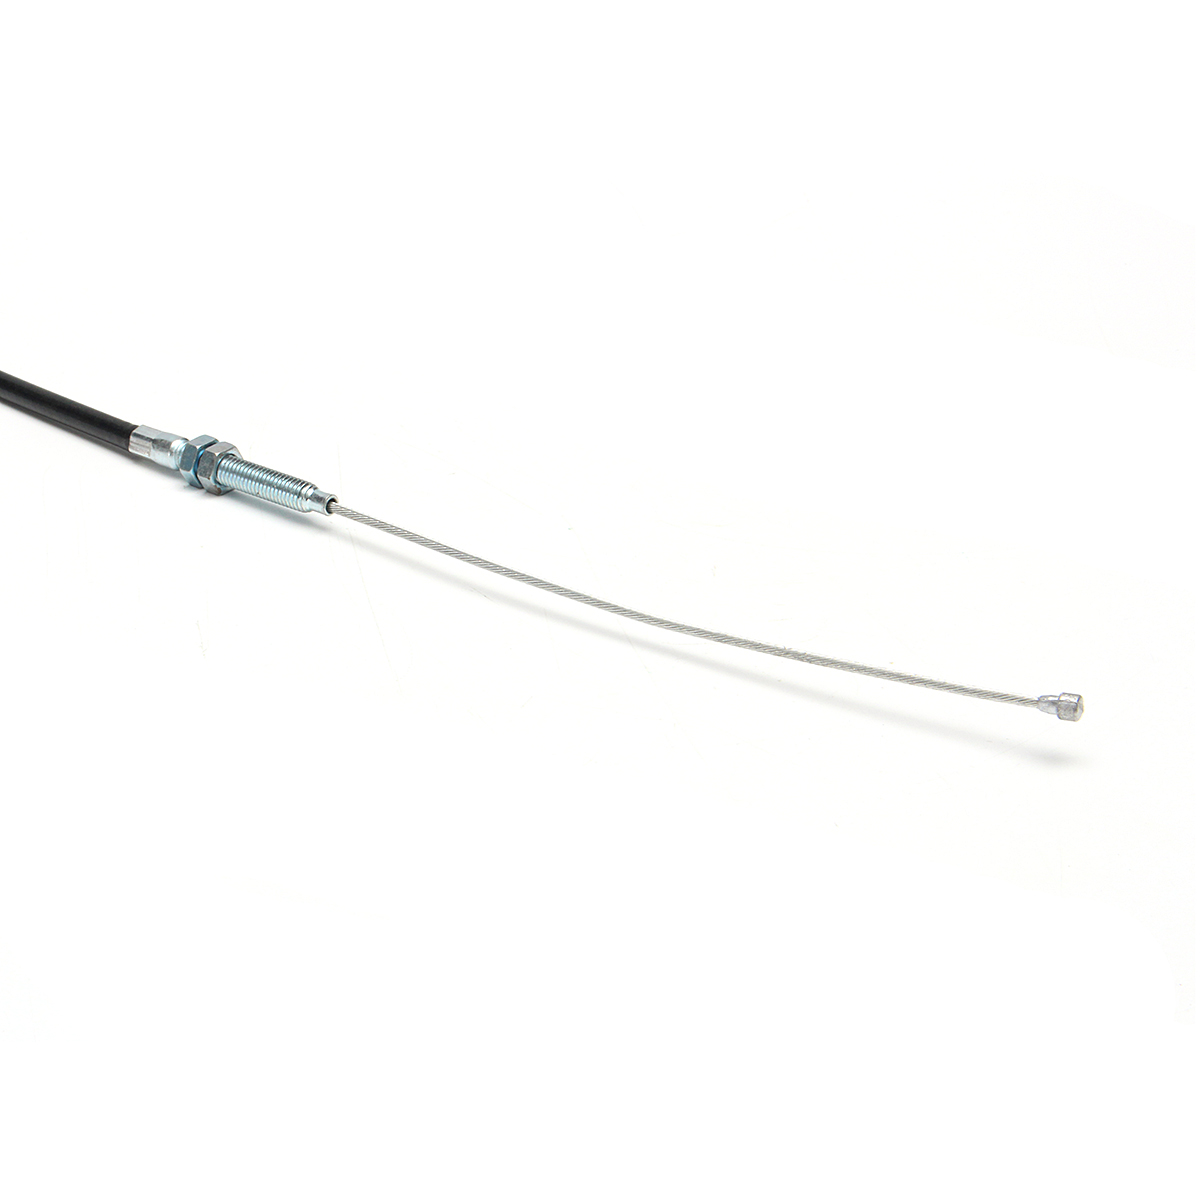 Motion Pro Handle Clutch Cable for Honda Trx300Ex 1993-2008 300Ex 02-0108